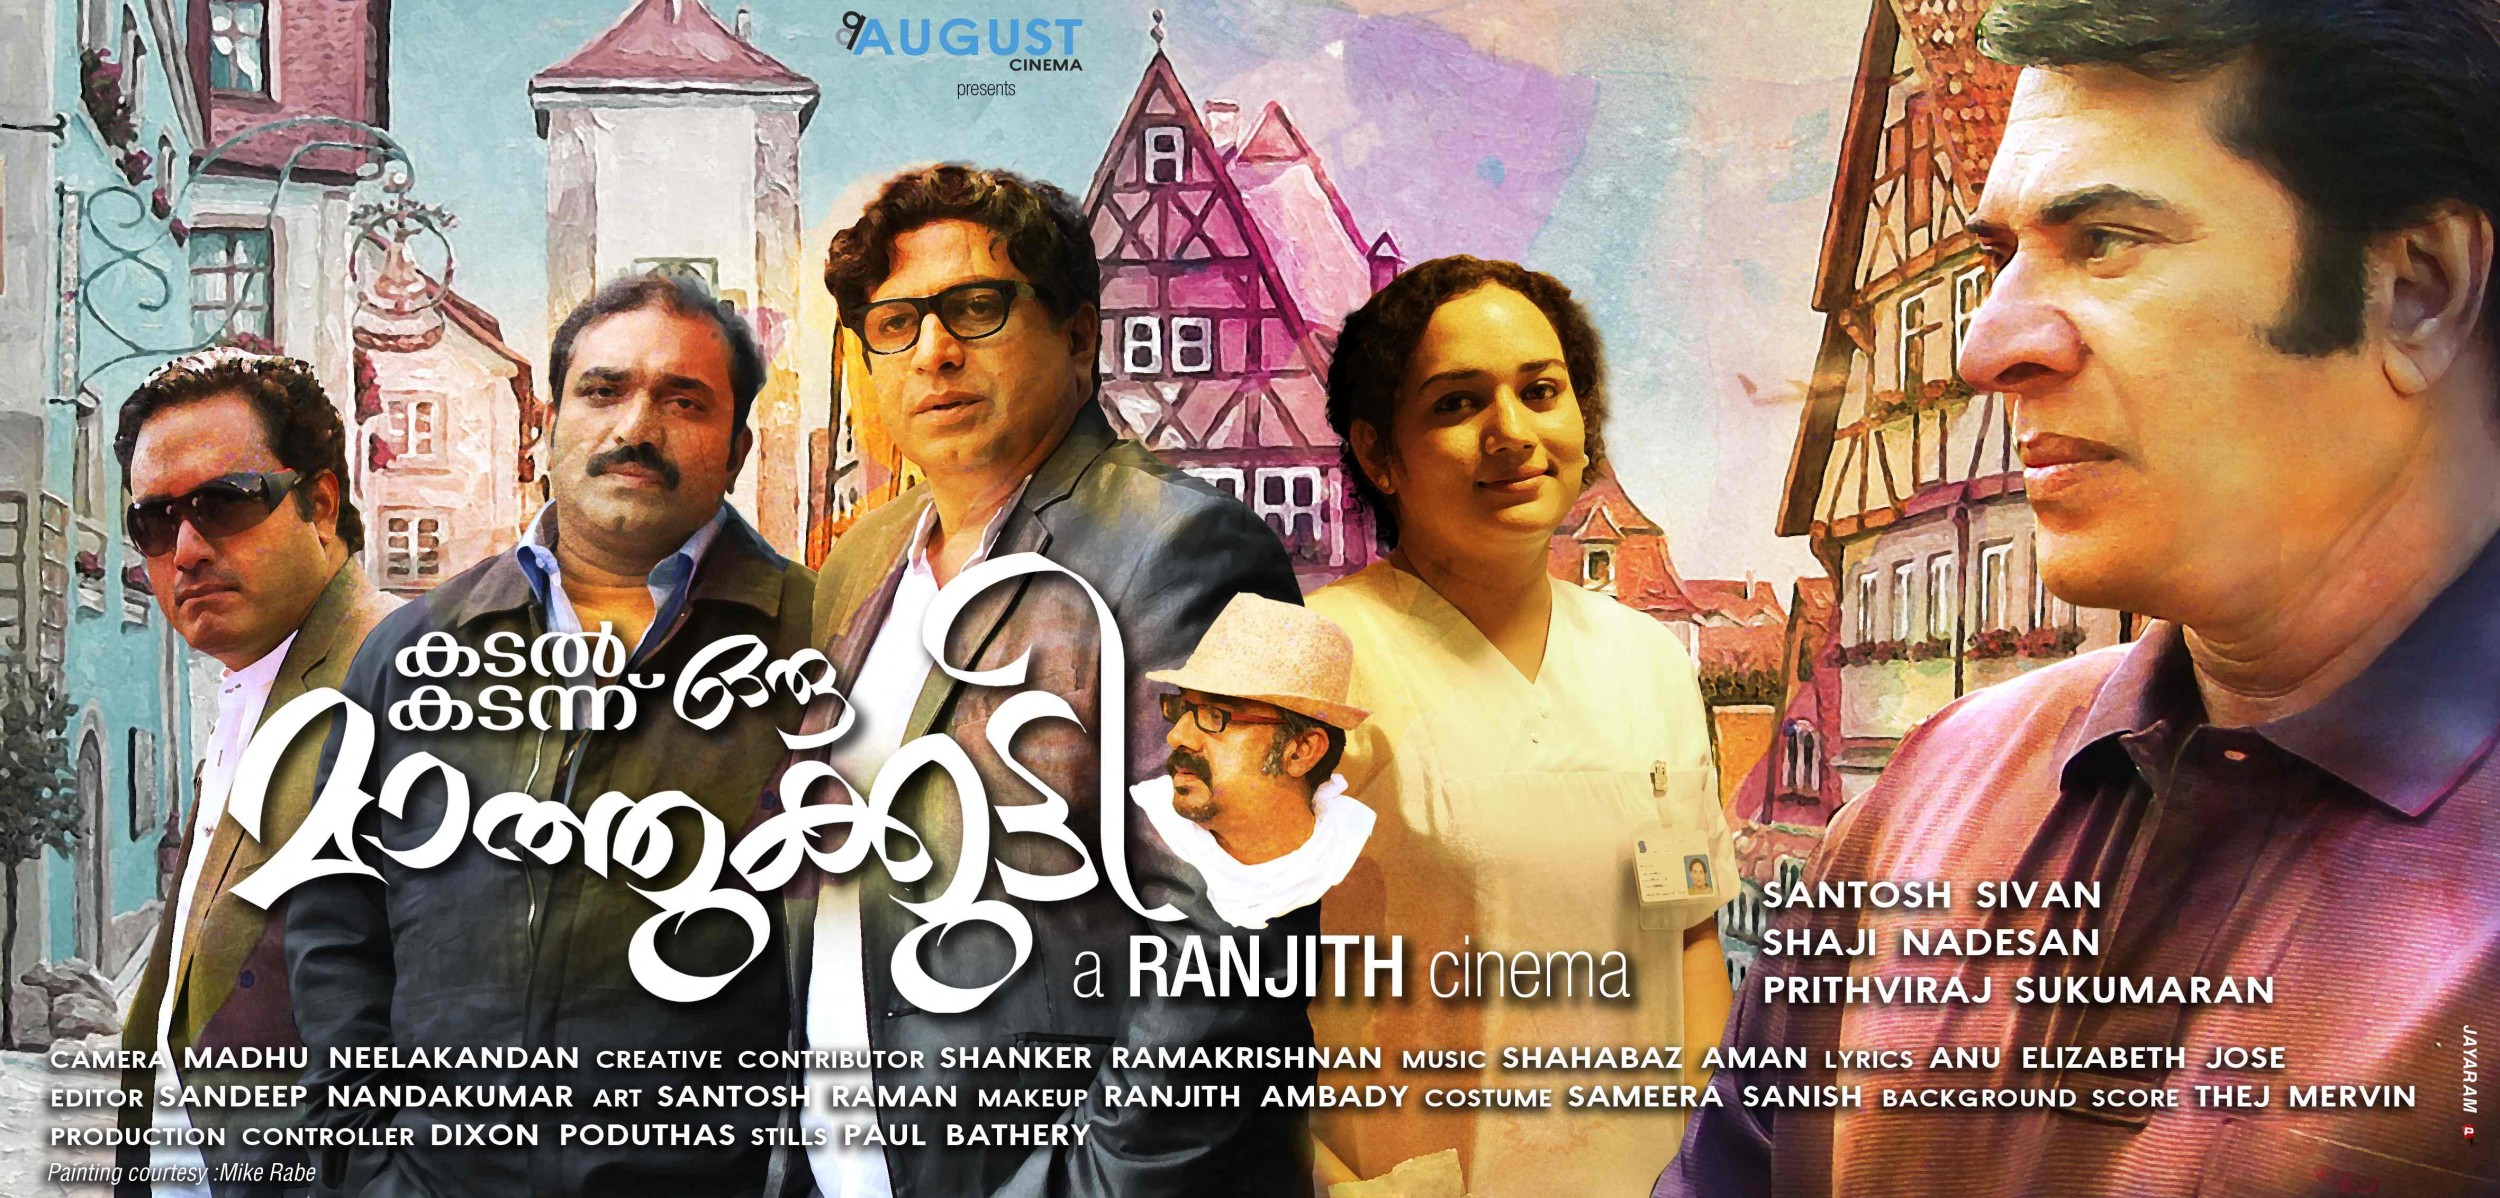 Mega Sized Movie Poster Image for Kadal Kadannu Oru Mathukutty (#6 of 11)